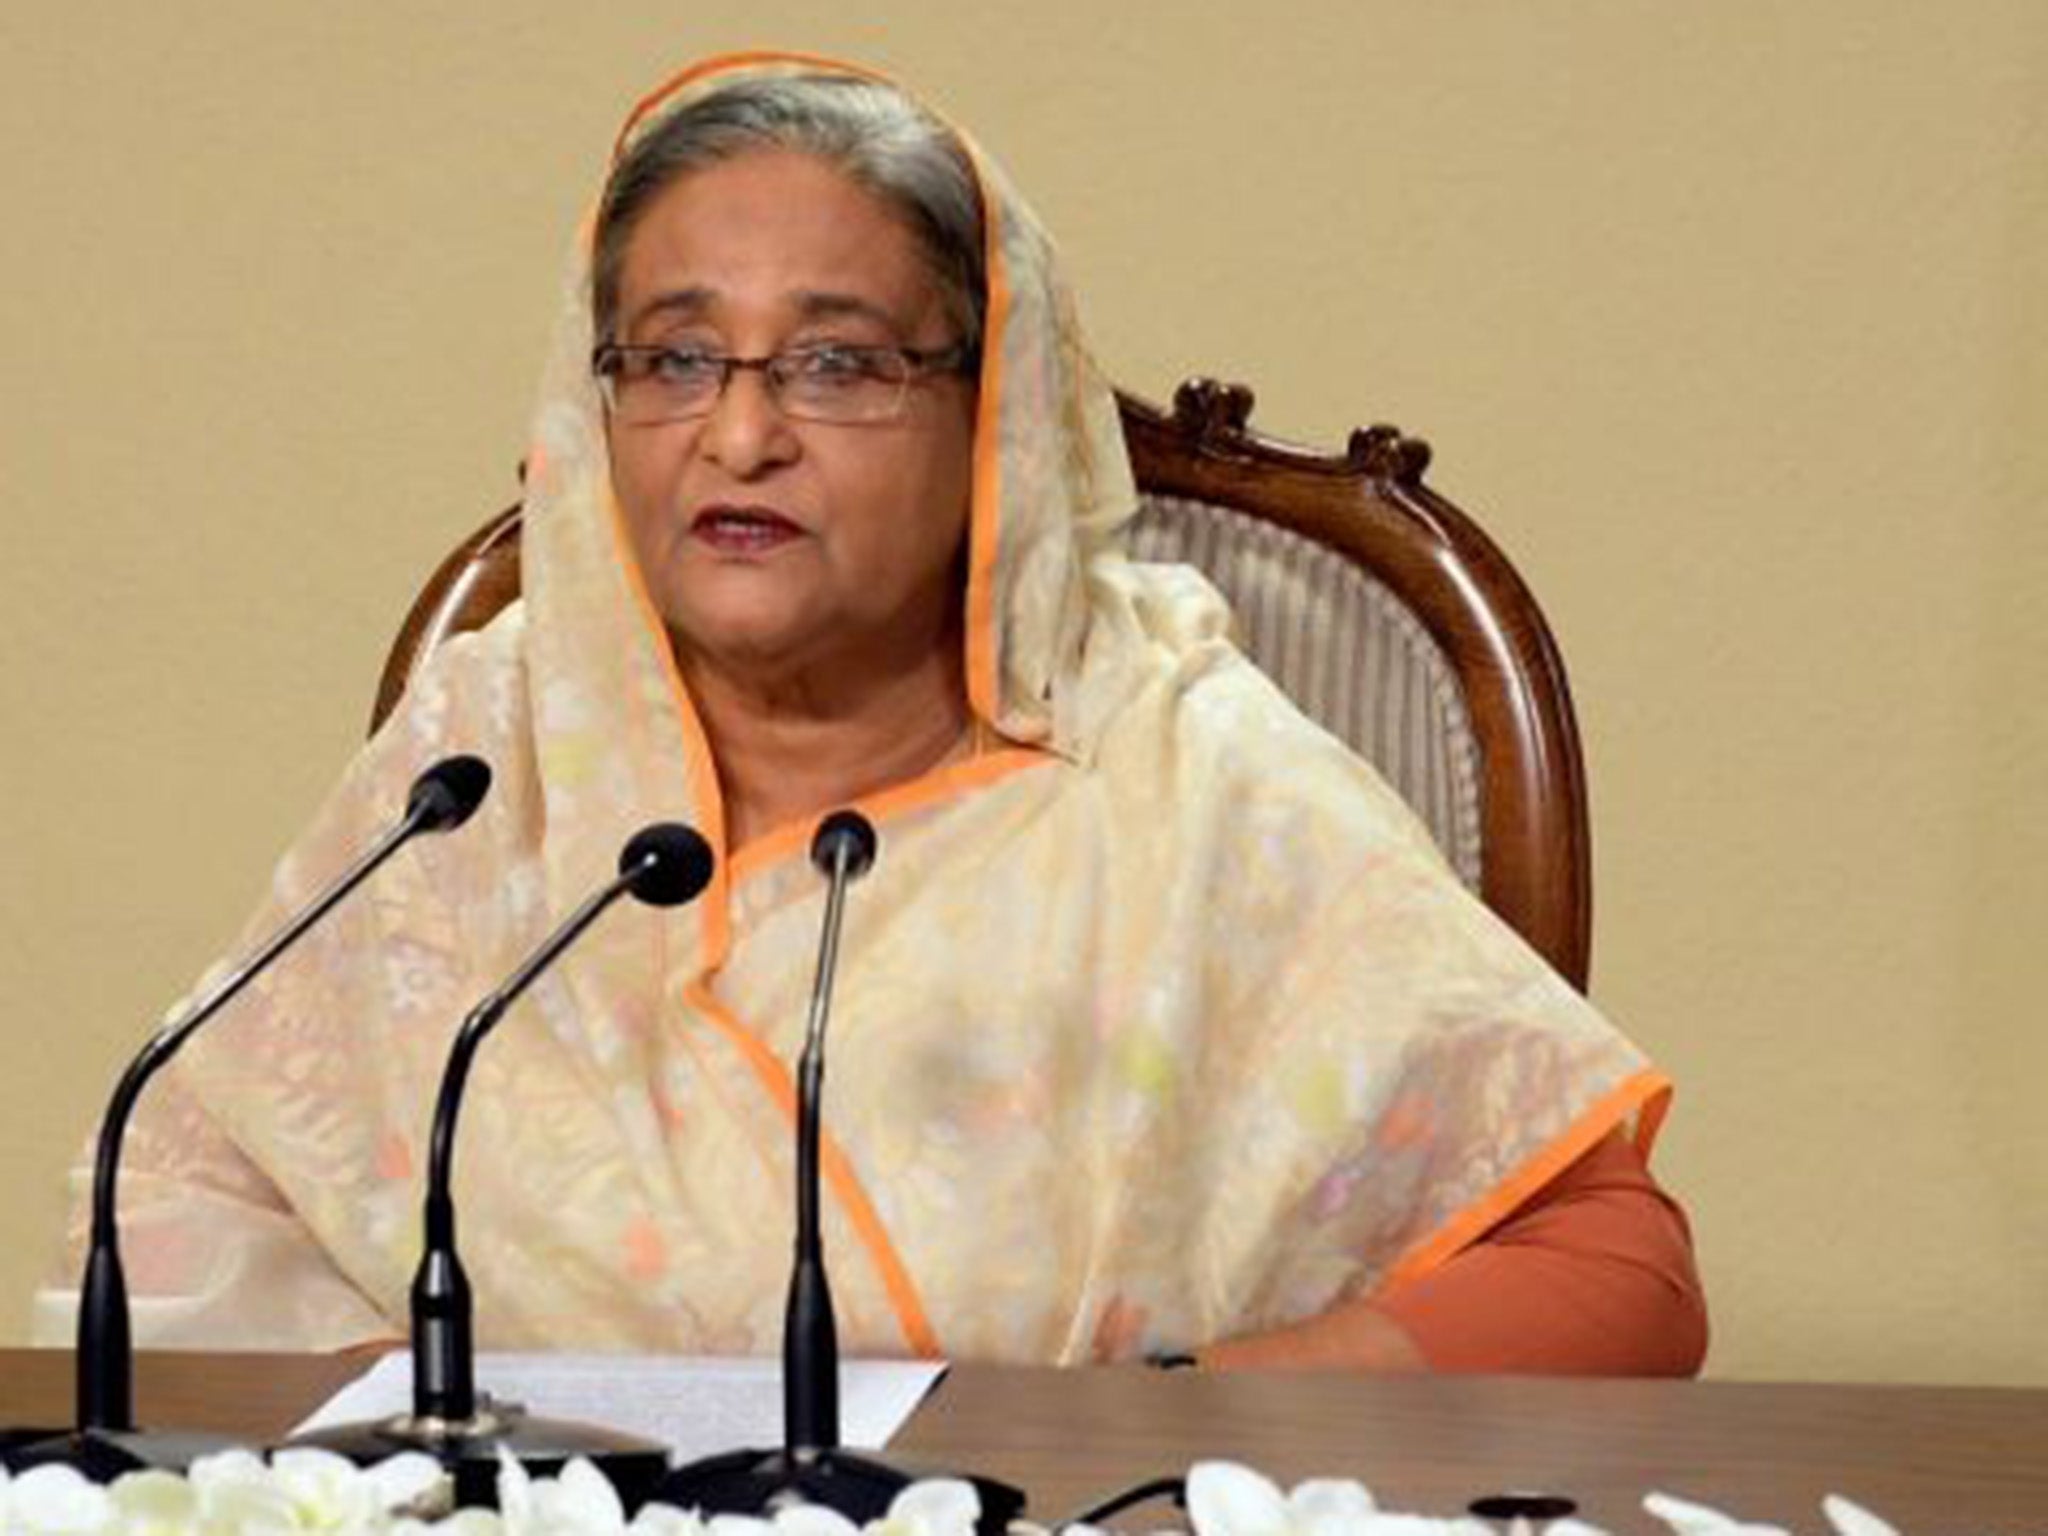 Bangladeshi prime minister Sheikh Hasina